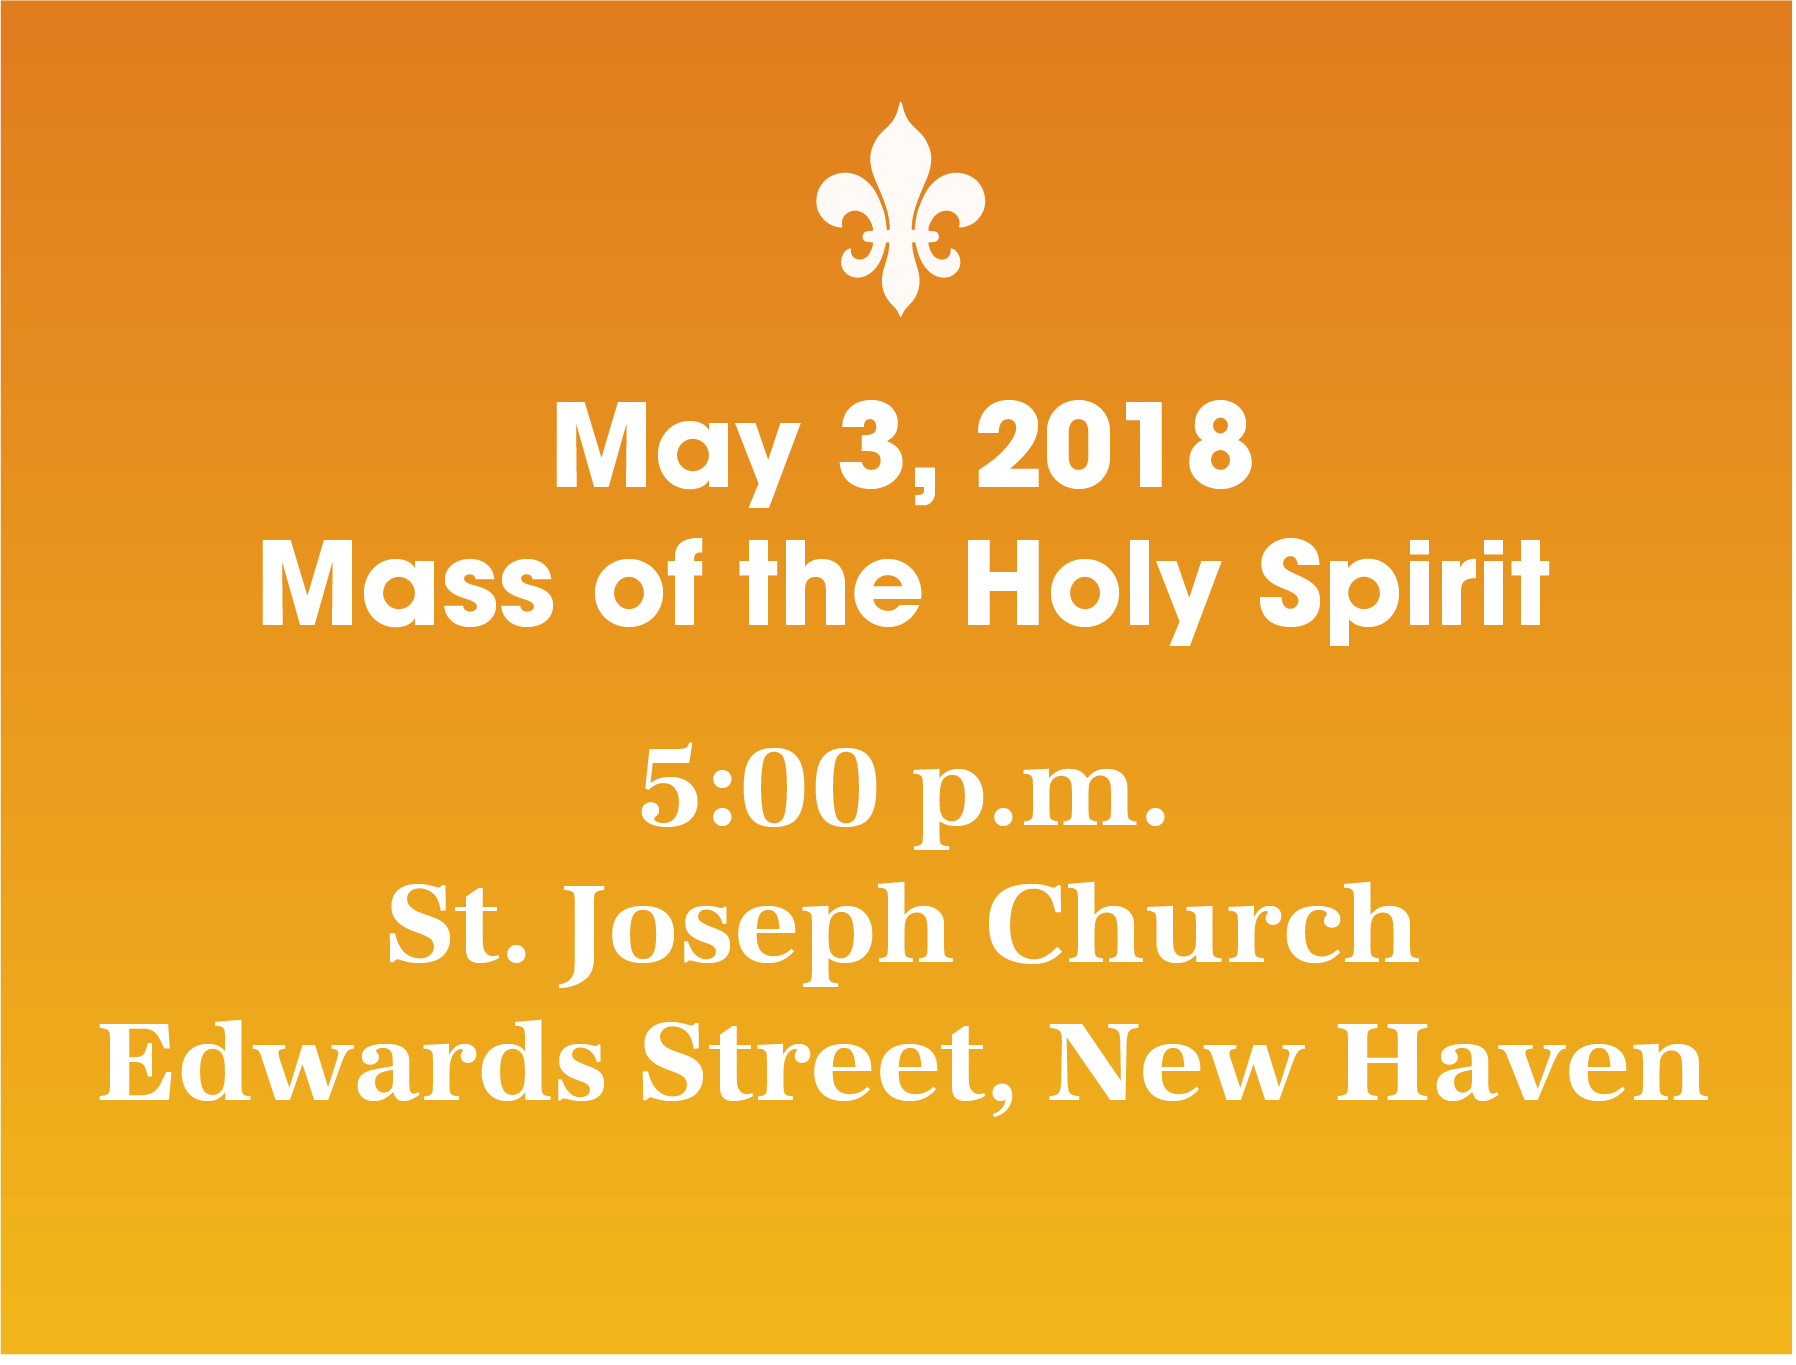 Mass of the Holy Spirit